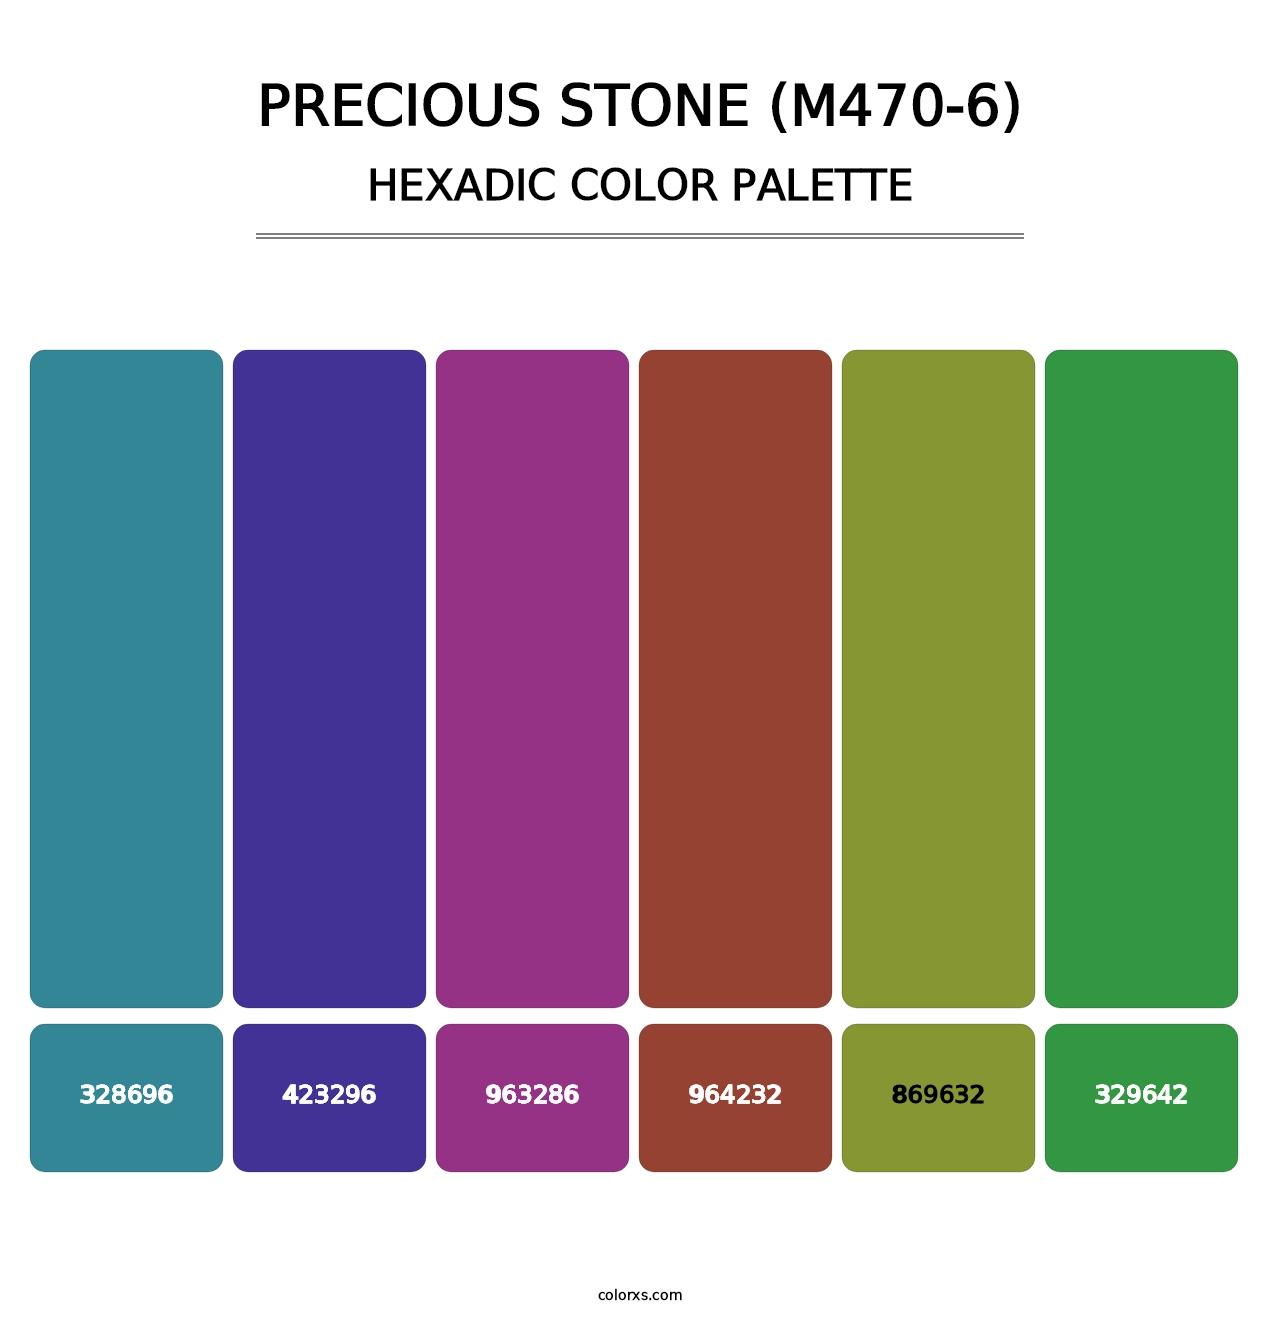 Precious Stone (M470-6) - Hexadic Color Palette